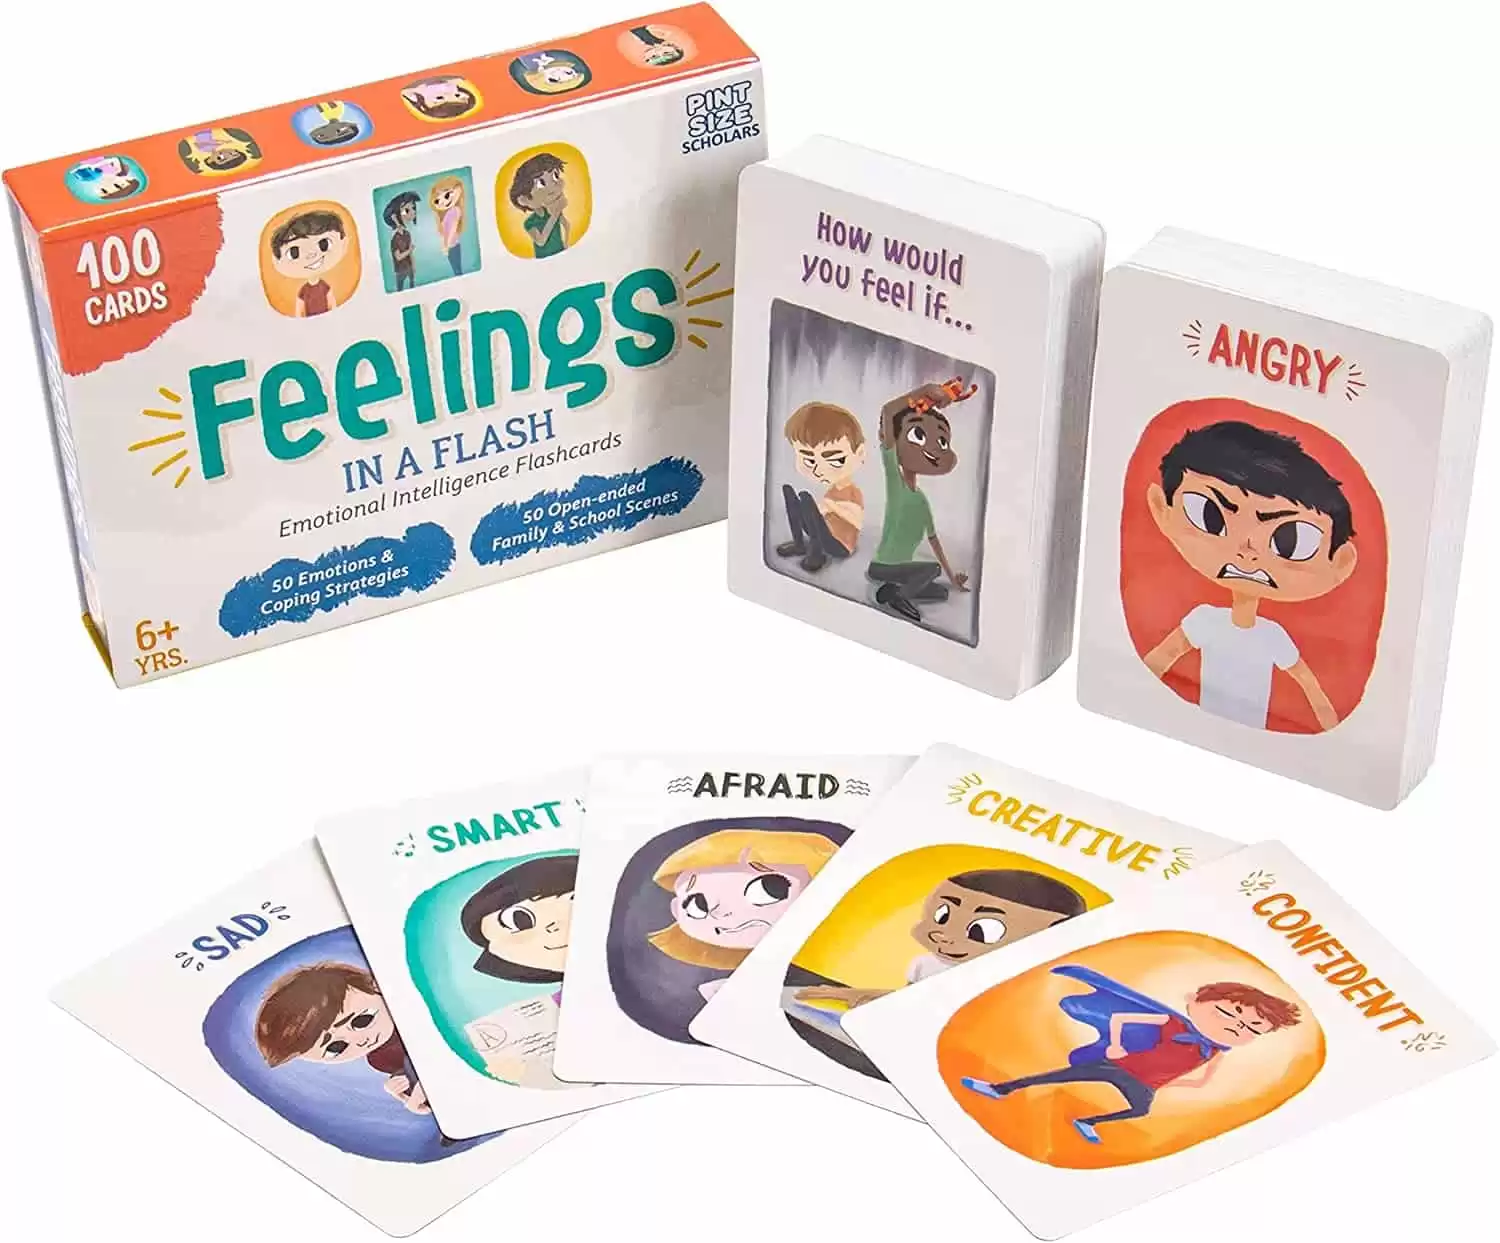 Feelings in a Flash - Emotional Intelligence Flashcard Game